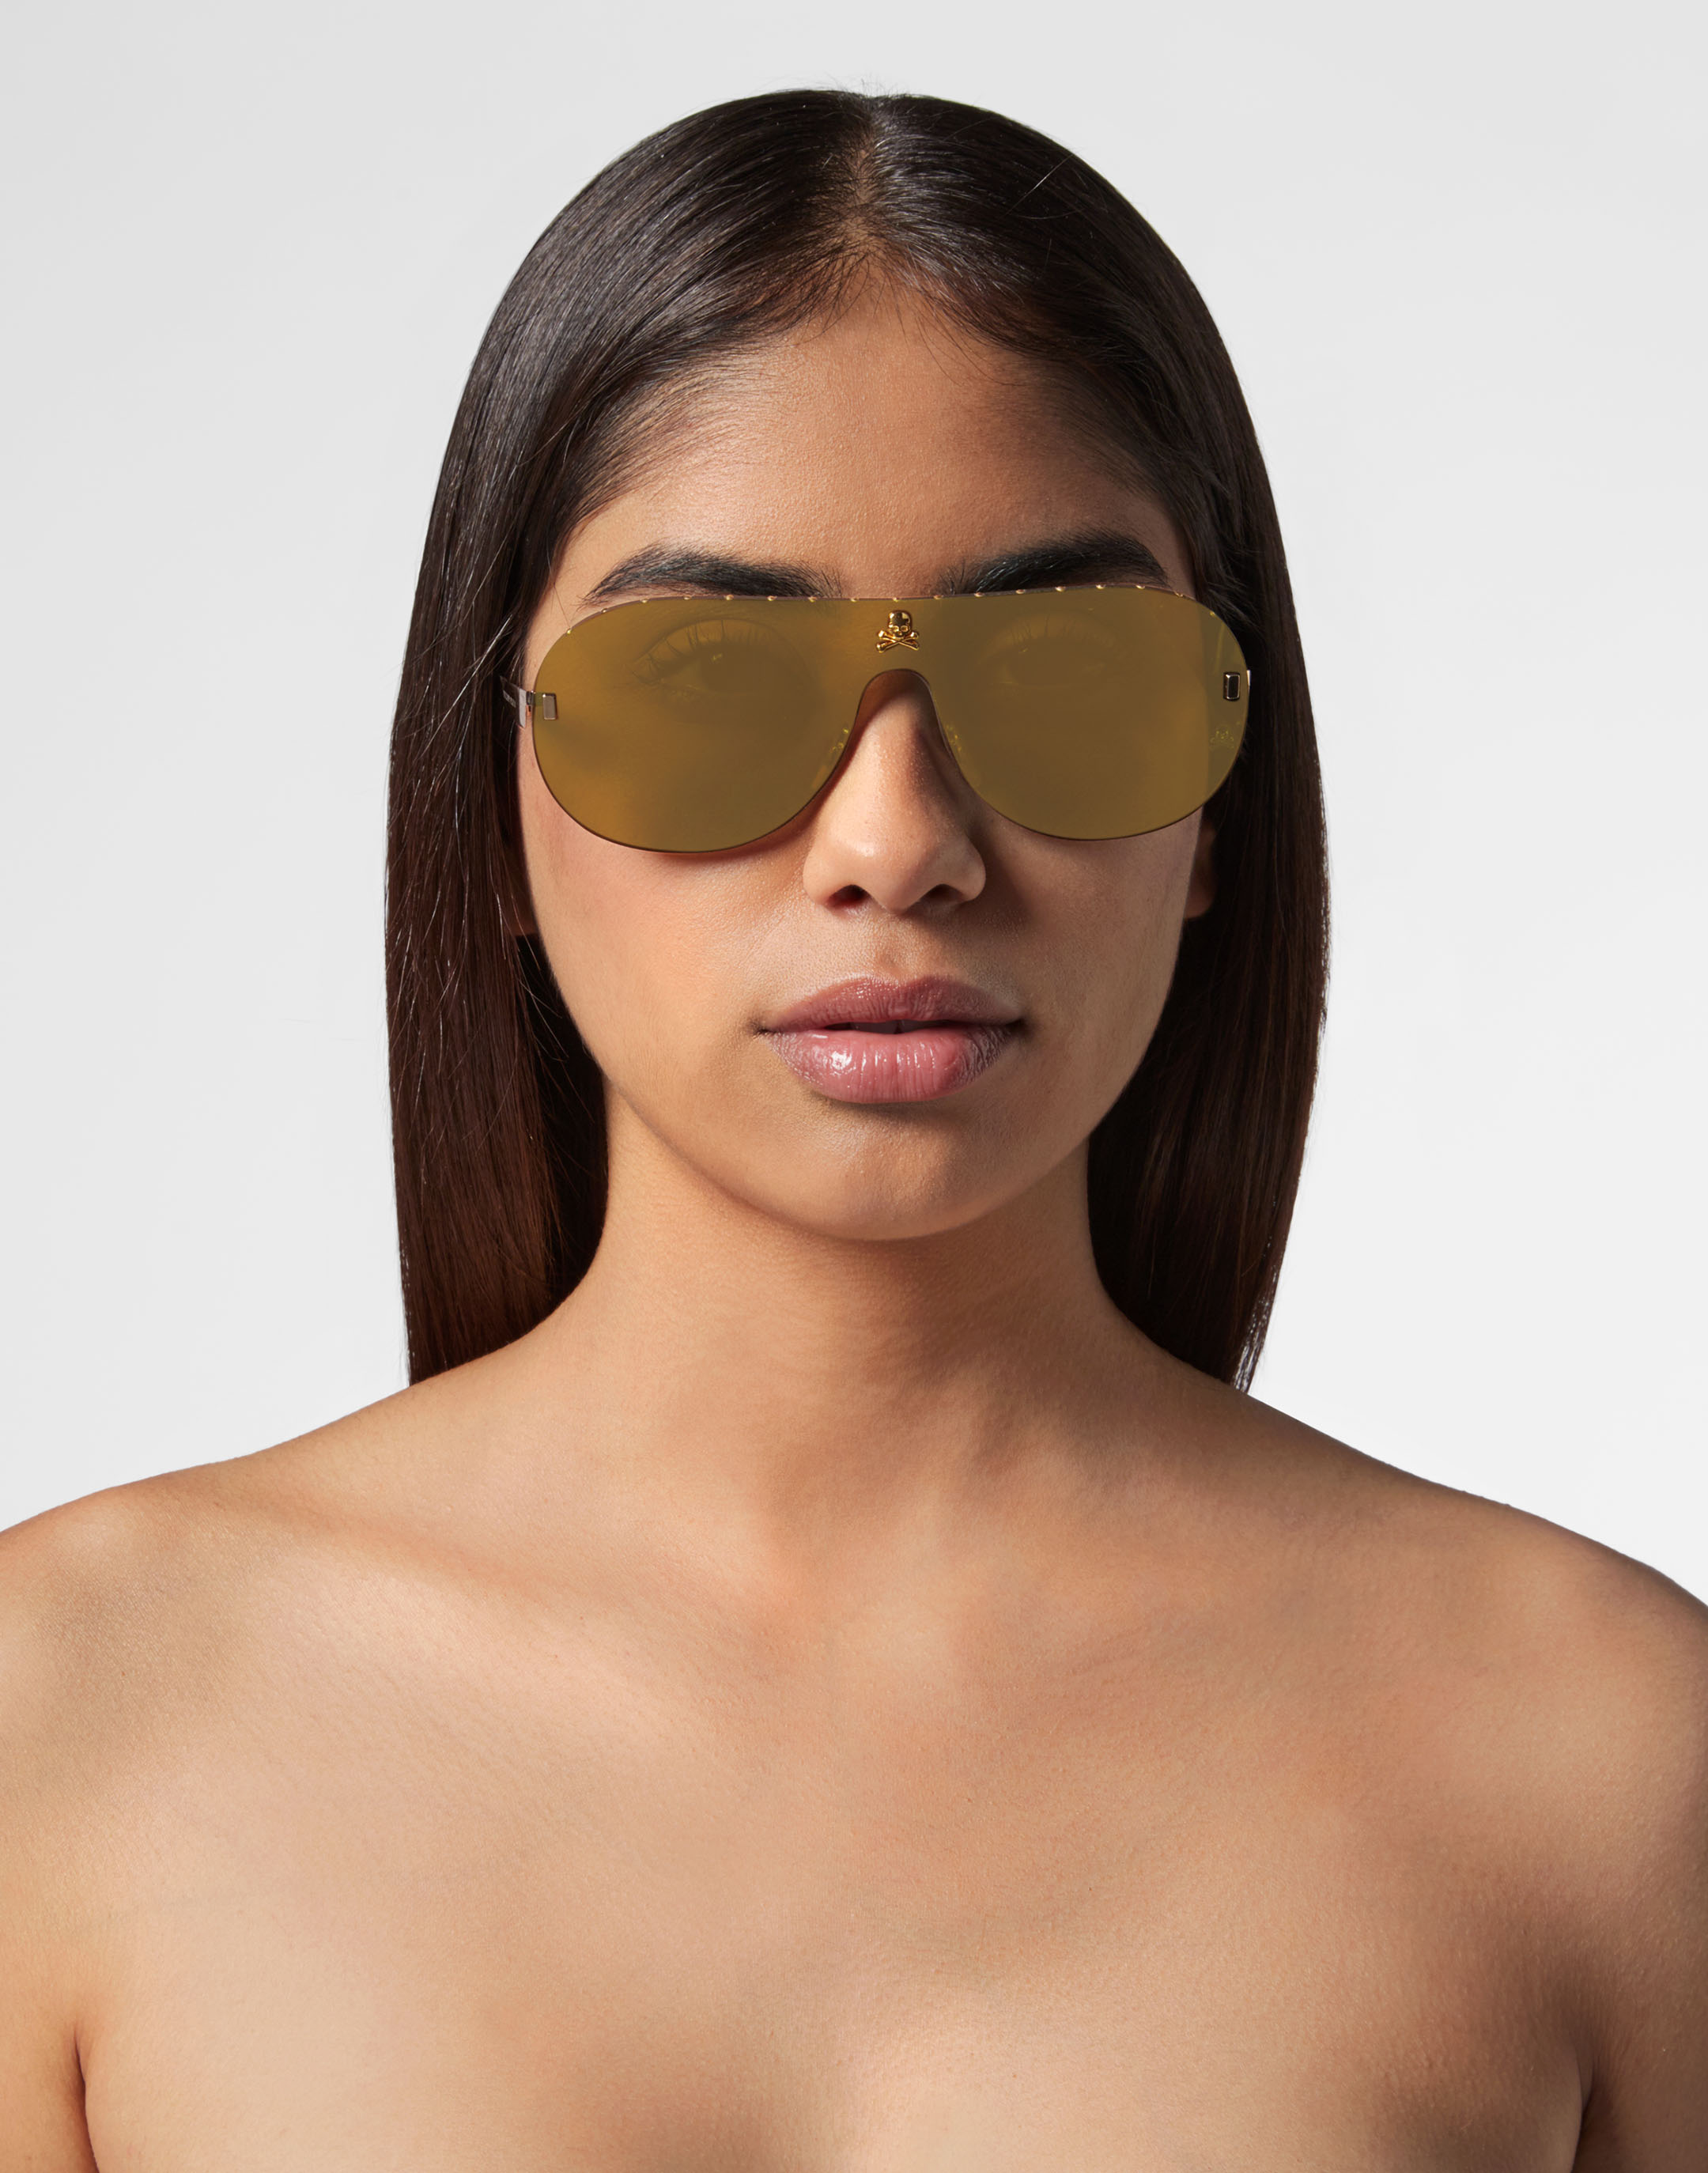 Sunglasses Target | Philipp Studs Plein Outlet